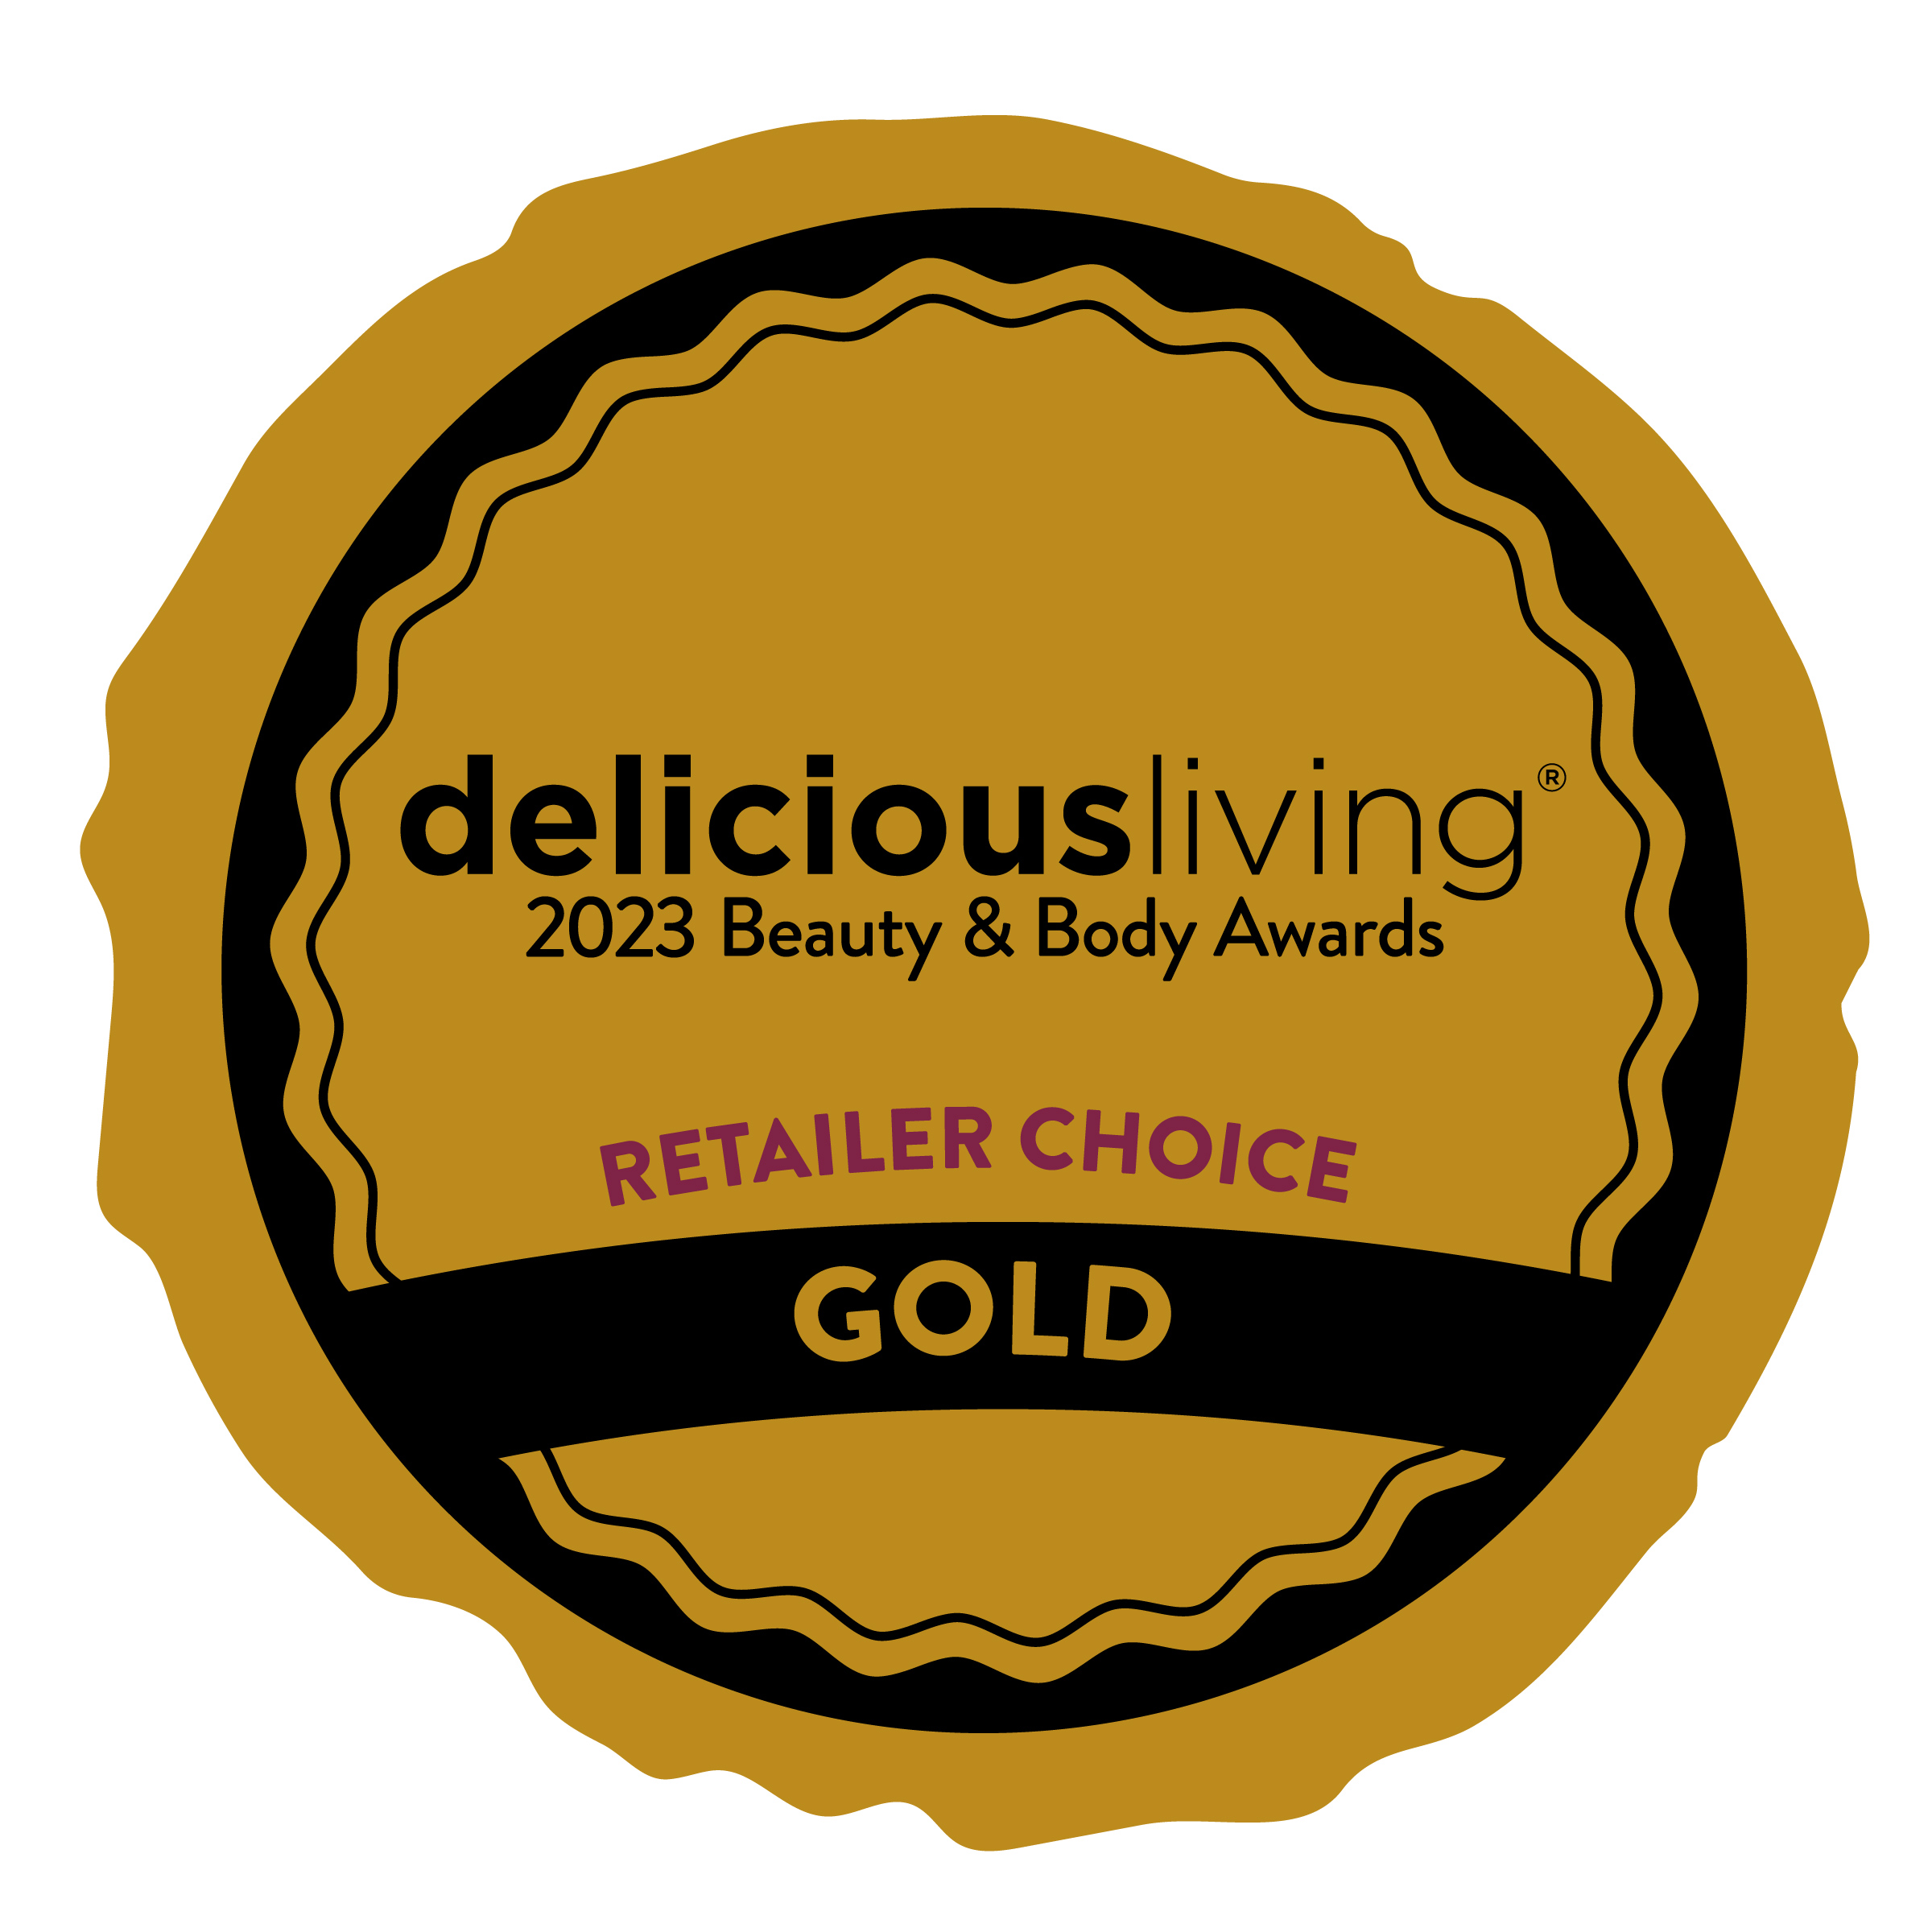 Desert Essence Foaming Hand Soap Pods Starter Kit, Lemongrass Wins Gold in Delicious Living 2023 Body and Beauty Awards - Retailer Hand Care Category